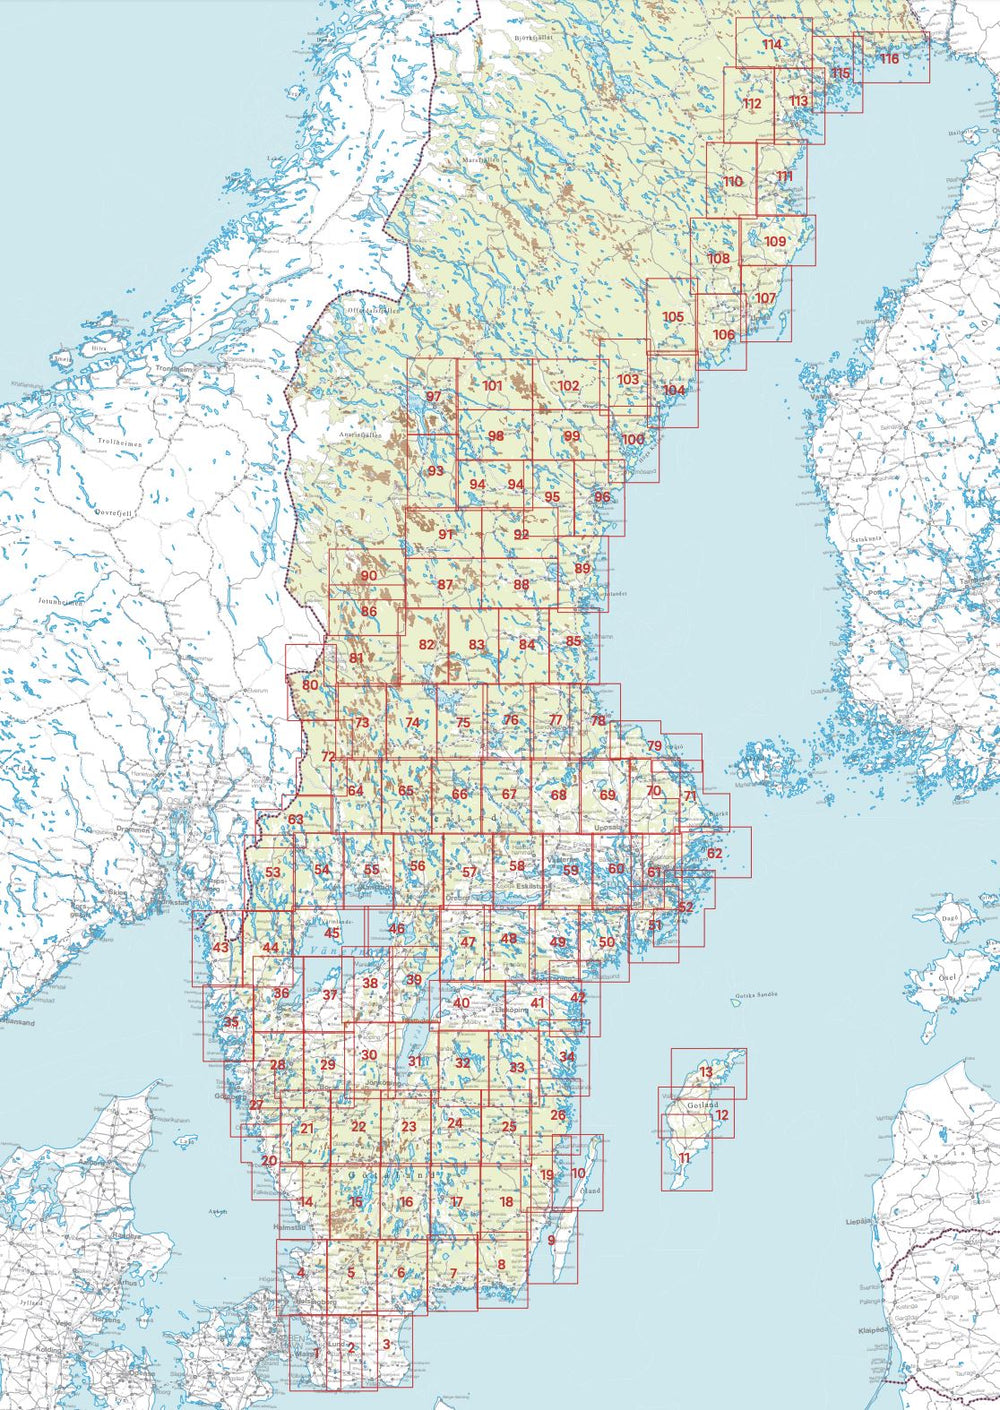 Carte topographique n° 74 - Vansbro (Suède) | Norstedts - Sverigeserien carte pliée Norstedts 